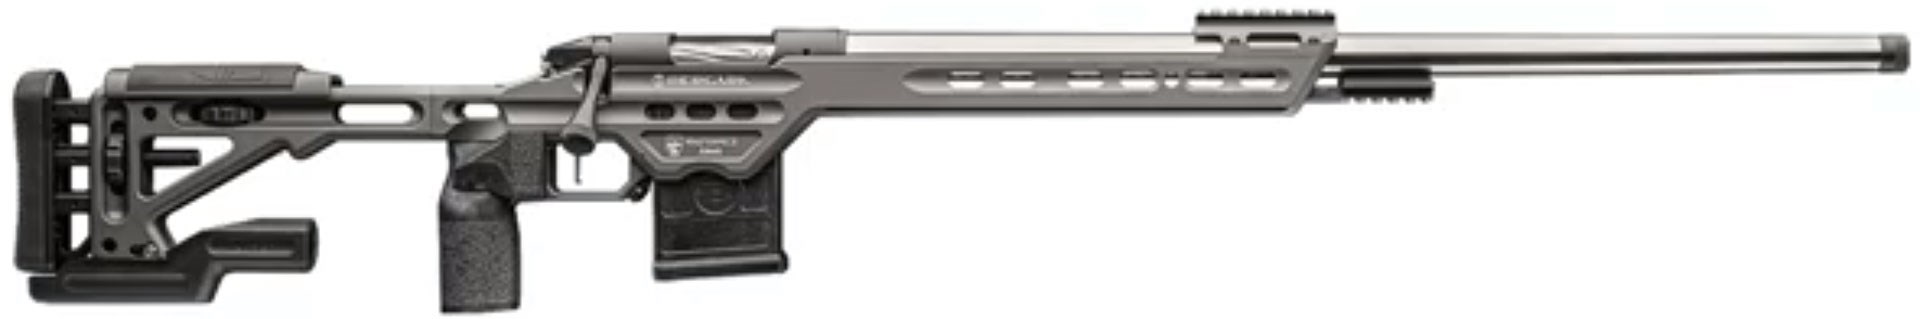 Bergara Premier Competition Rifle on White